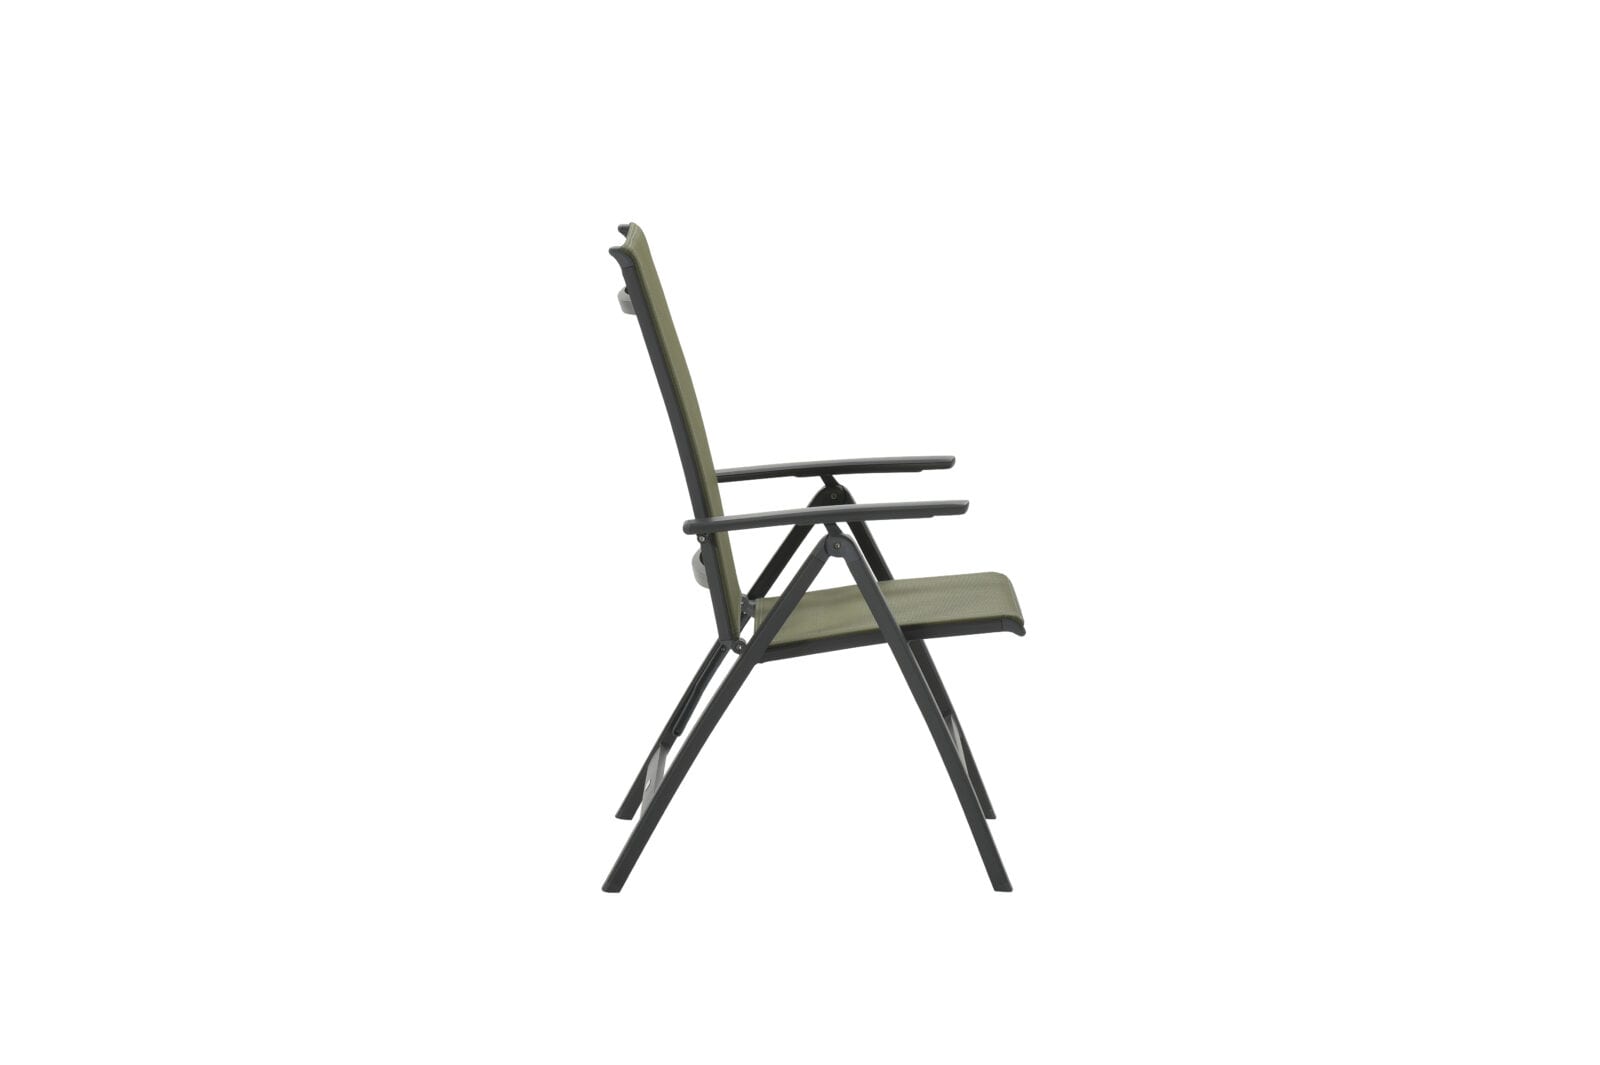 Gala verstelbare stoel - carbon black/ anthr/grey teak look 60308GT rechts 1 5MB scaled